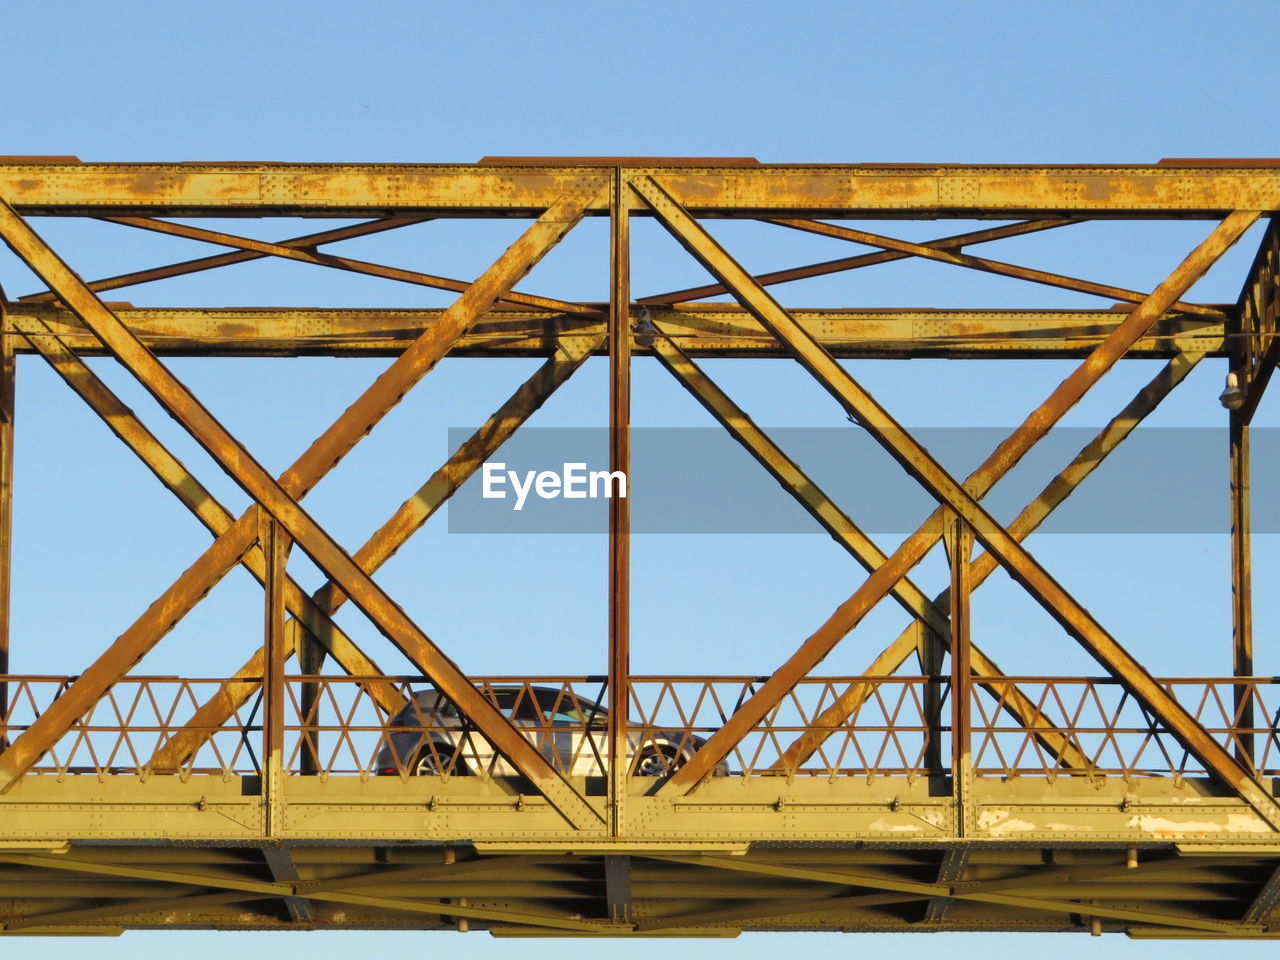 VIEW OF SUSPENSION BRIDGE AGAINST CLEAR SKY